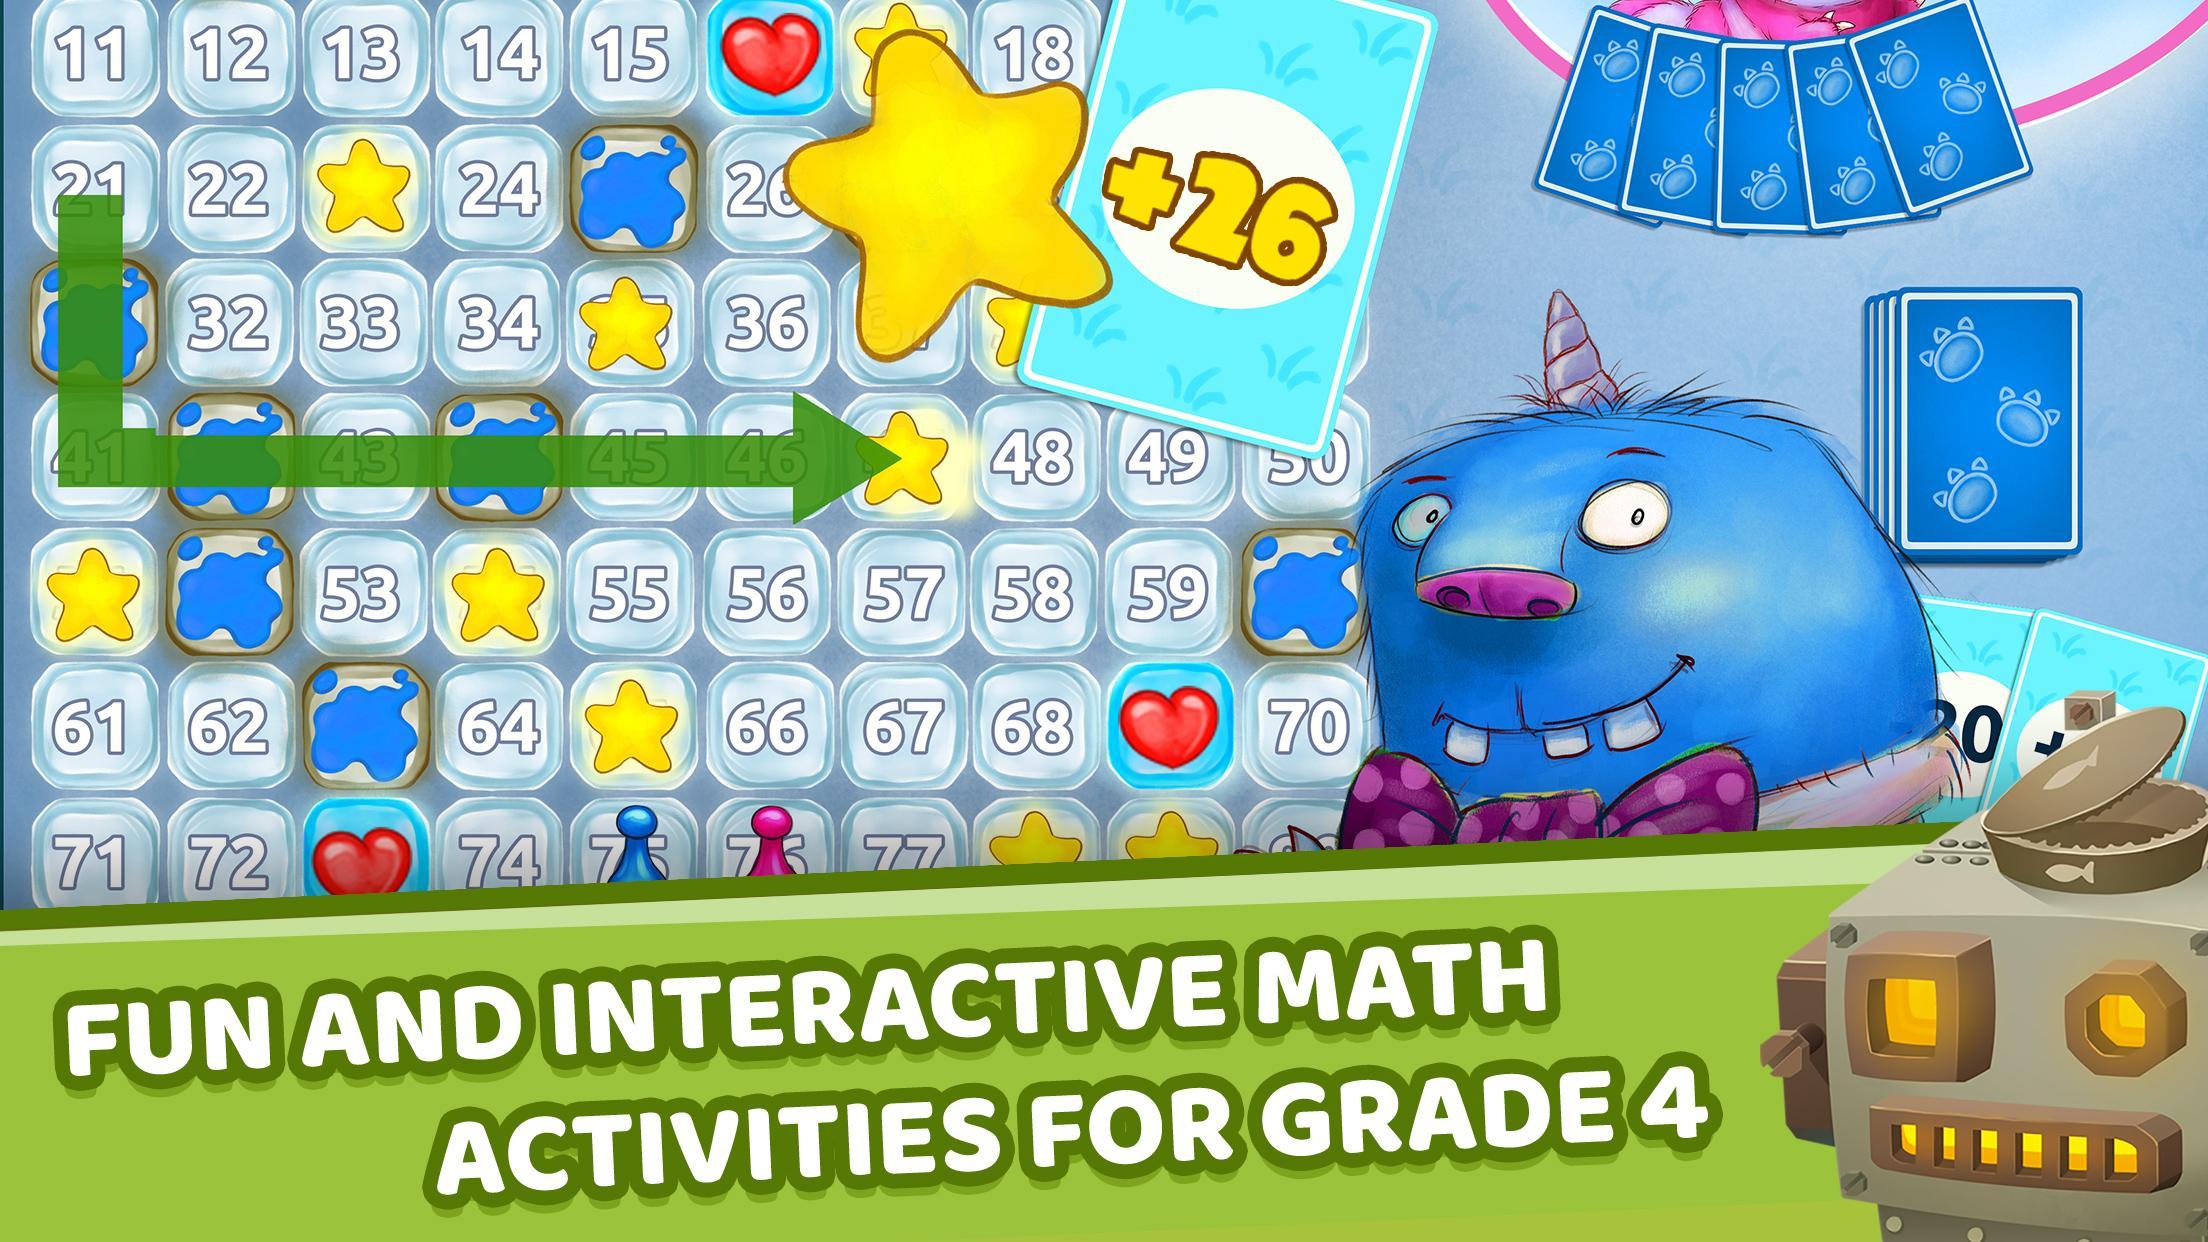 Matific Galaxy - Maths Games for 4th Graders 2.2.2 Screenshot 15